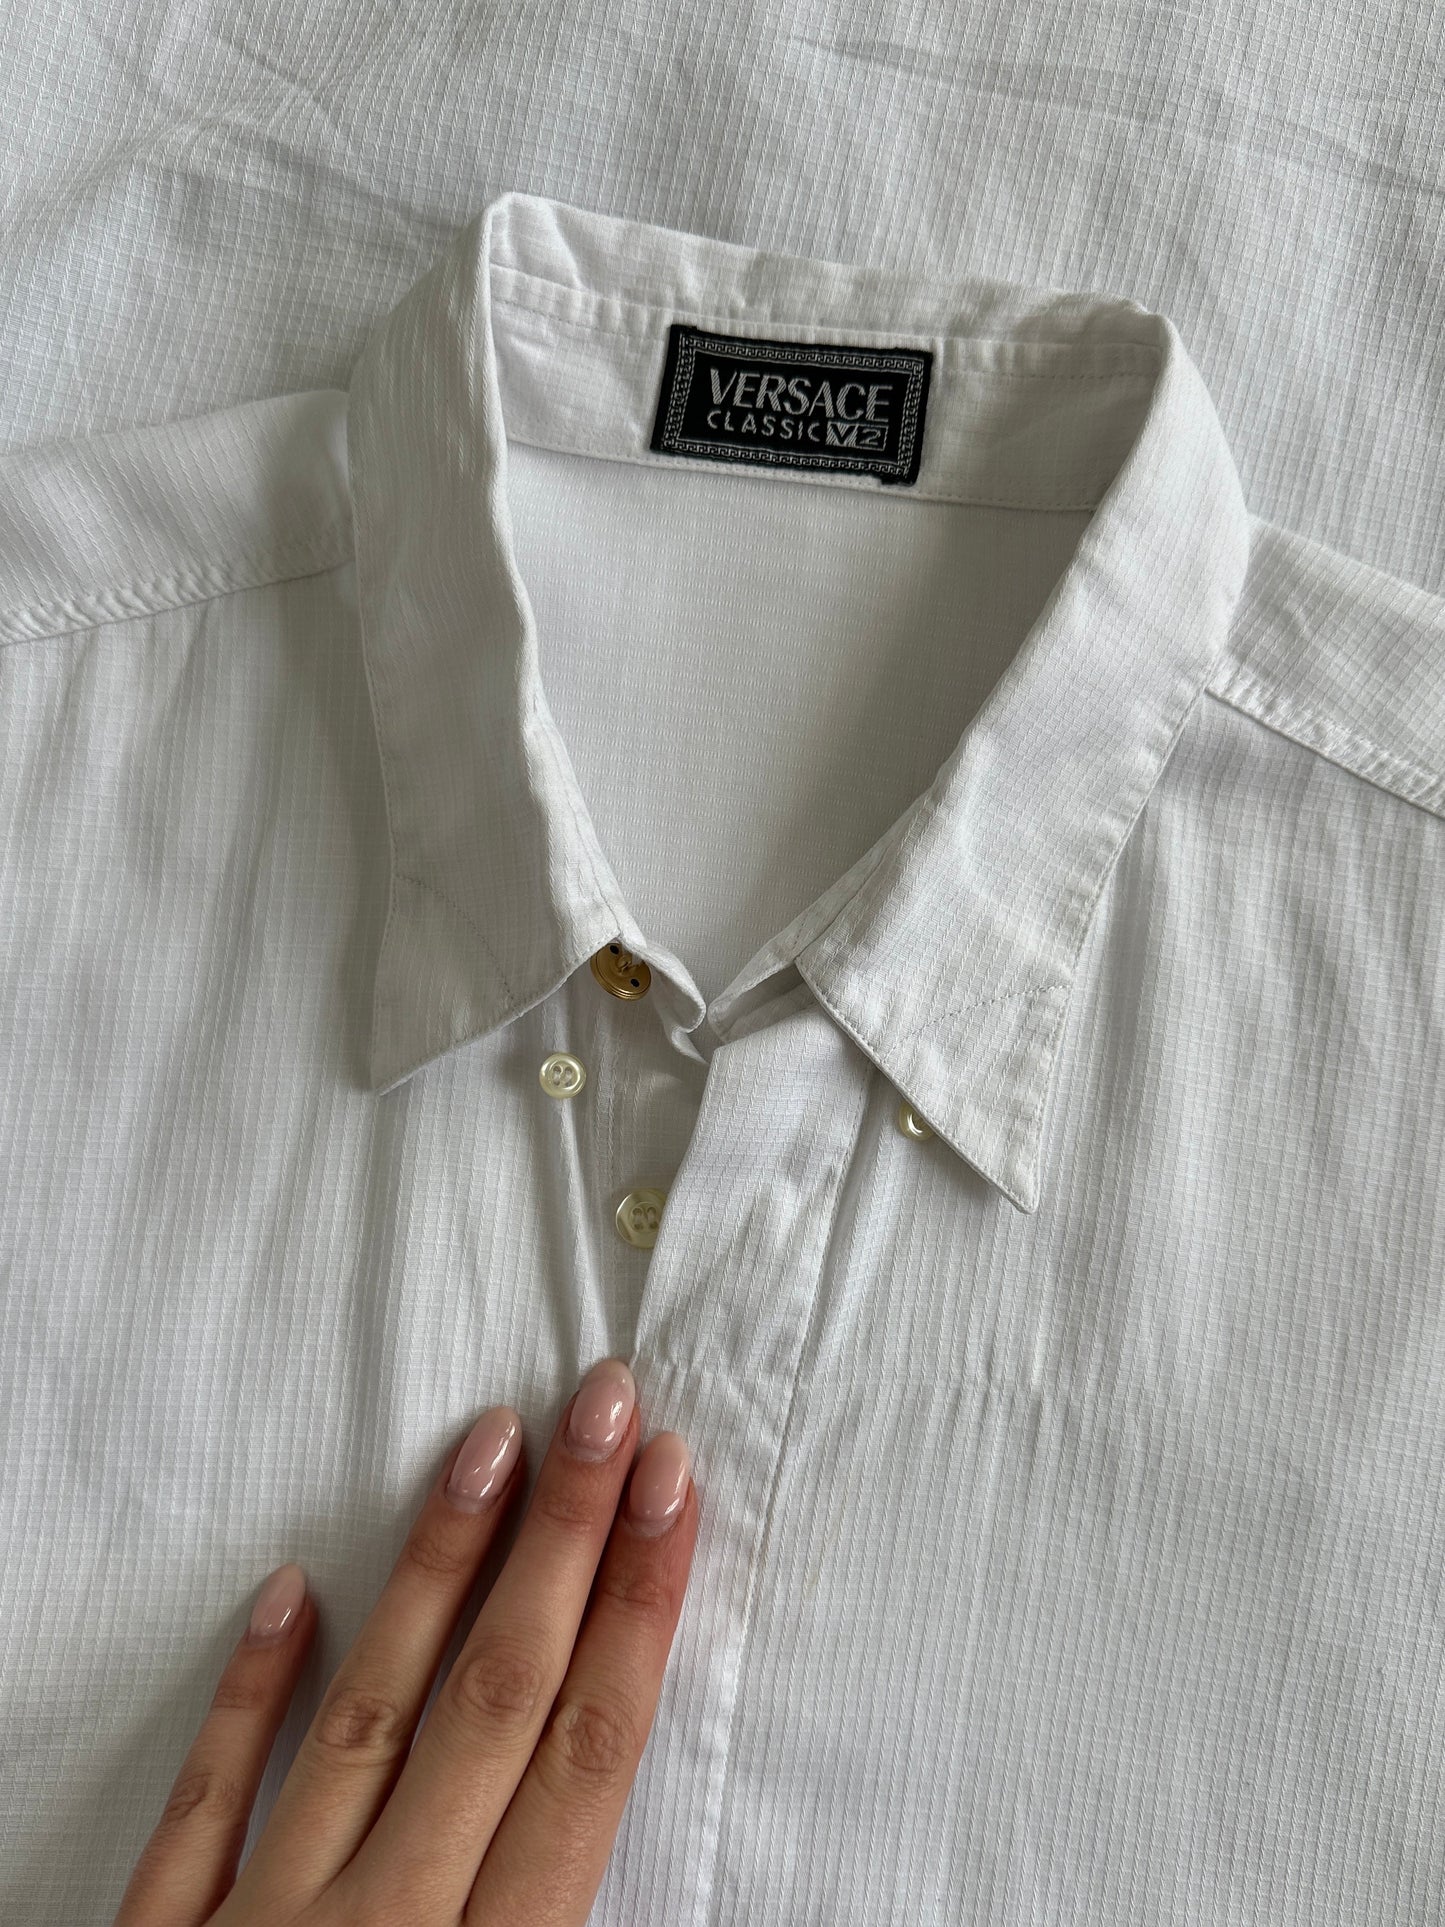 Versace Classic V2 Pure Cotton Shirt - XL